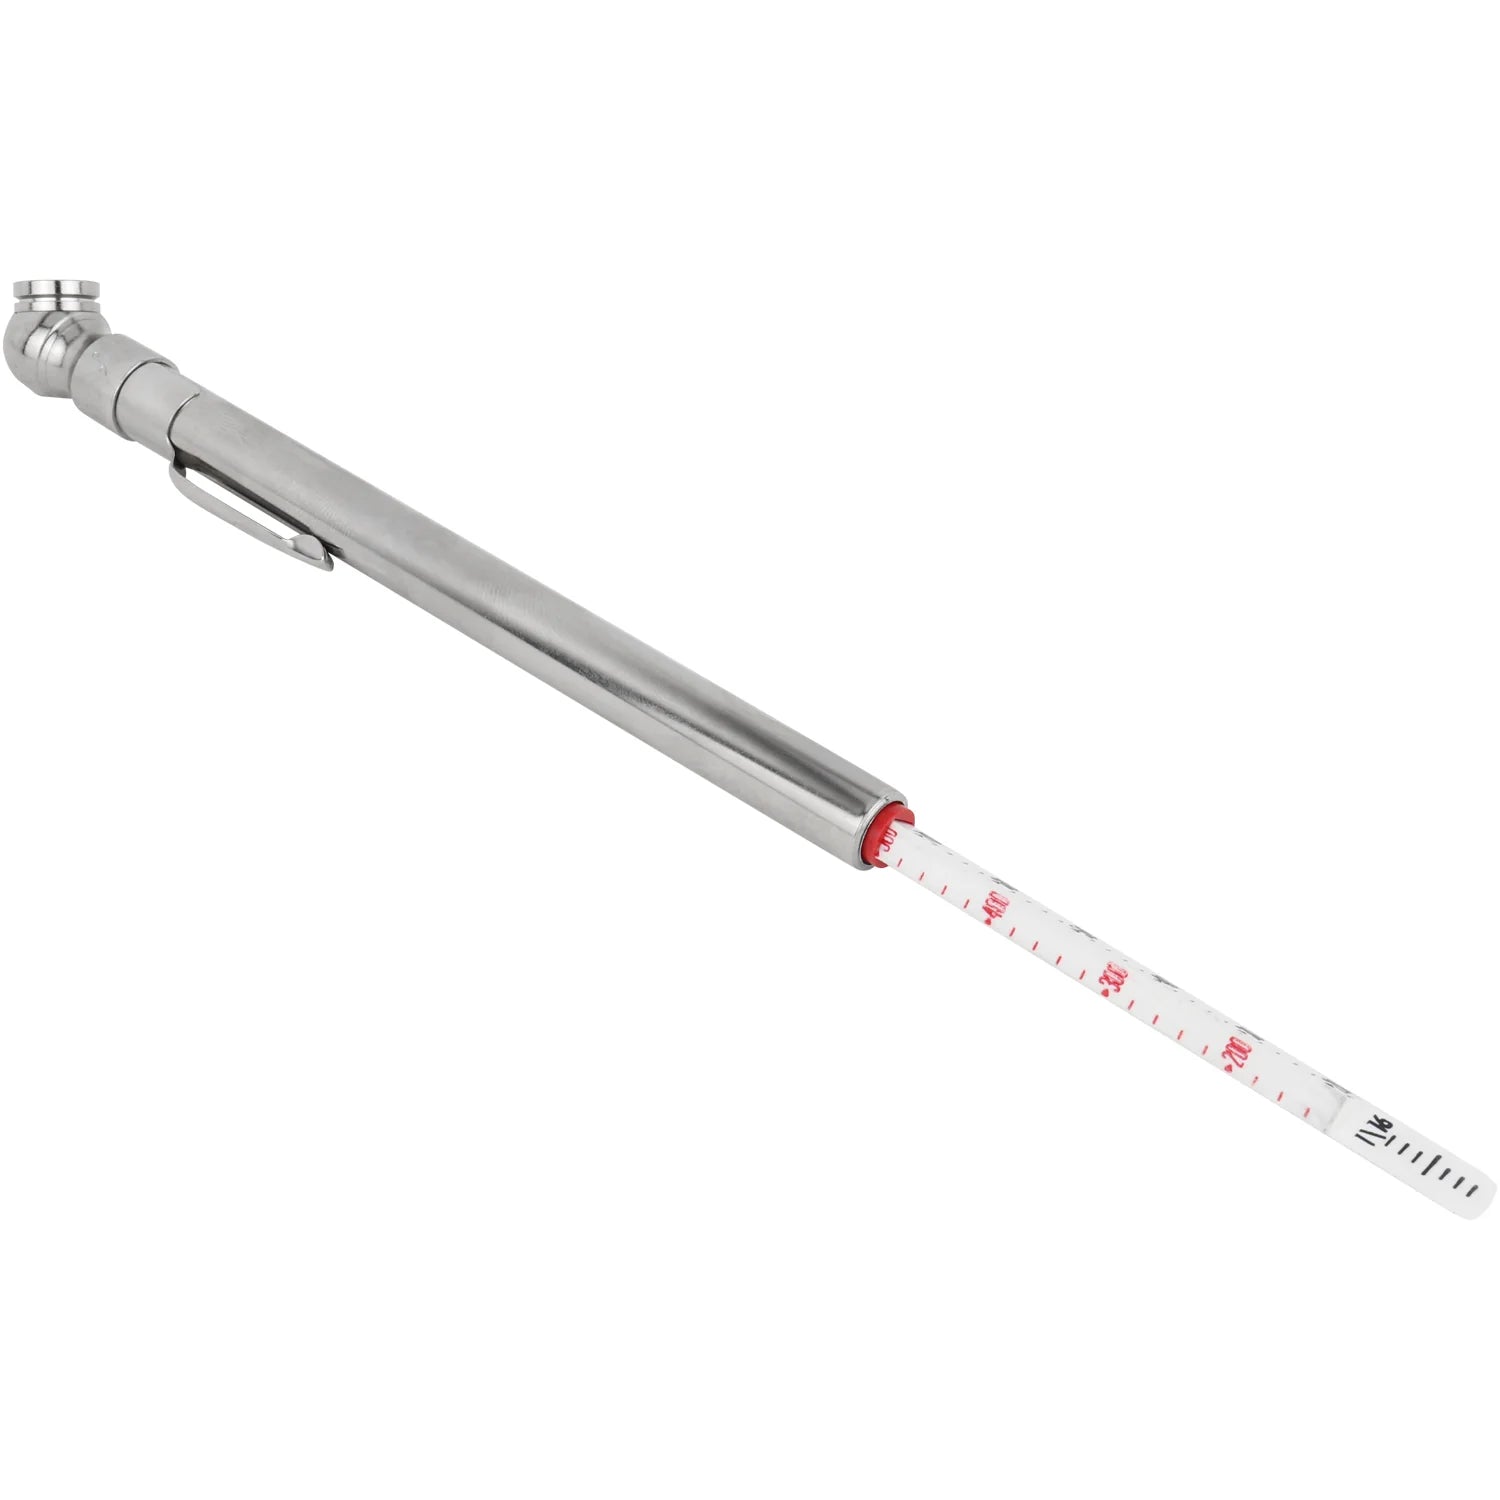 Pencil Air & Tread Gauge - 10-70 PSI